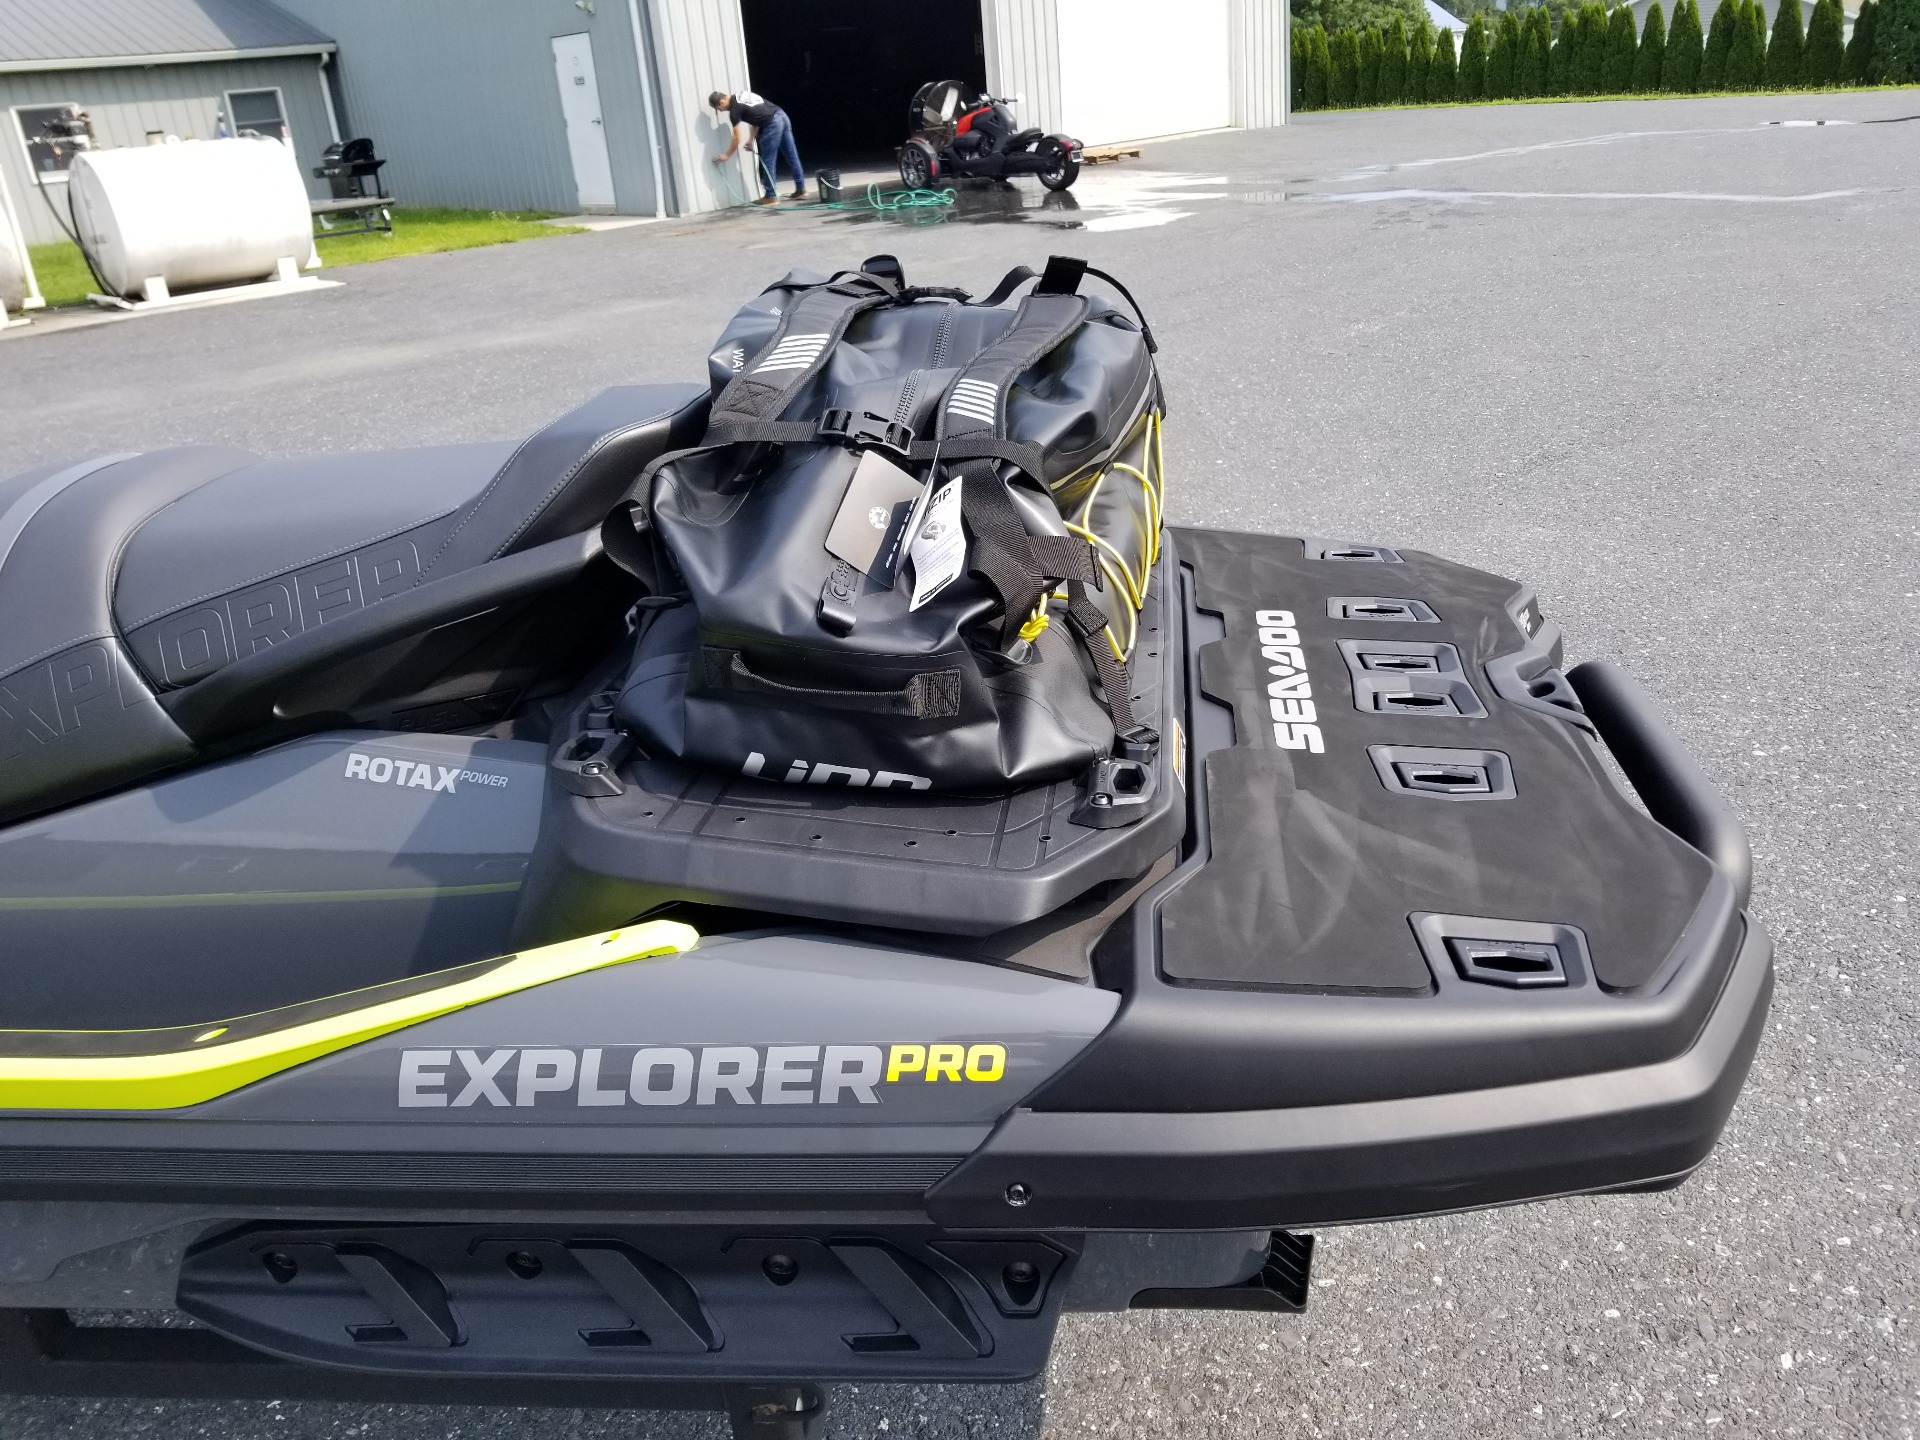 2023 Sea-Doo Explorer Pro 170 in Grantville, Pennsylvania - Photo 28